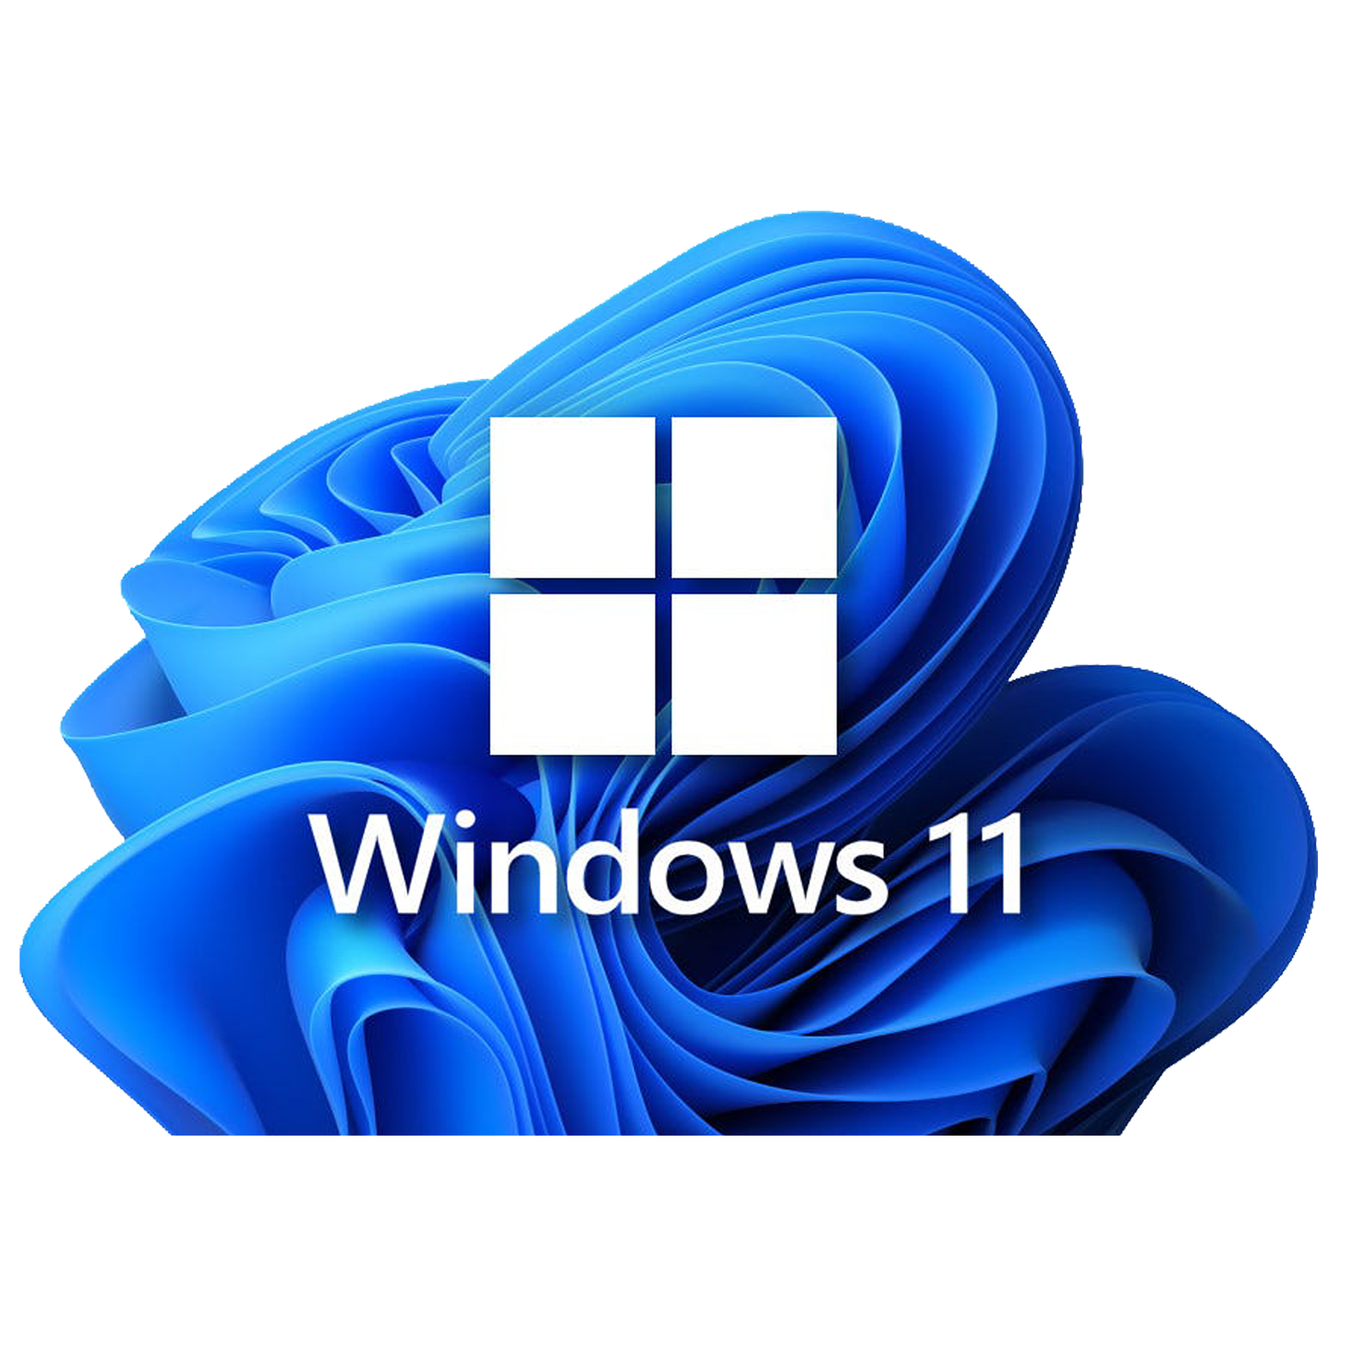 Windows 11 Devices